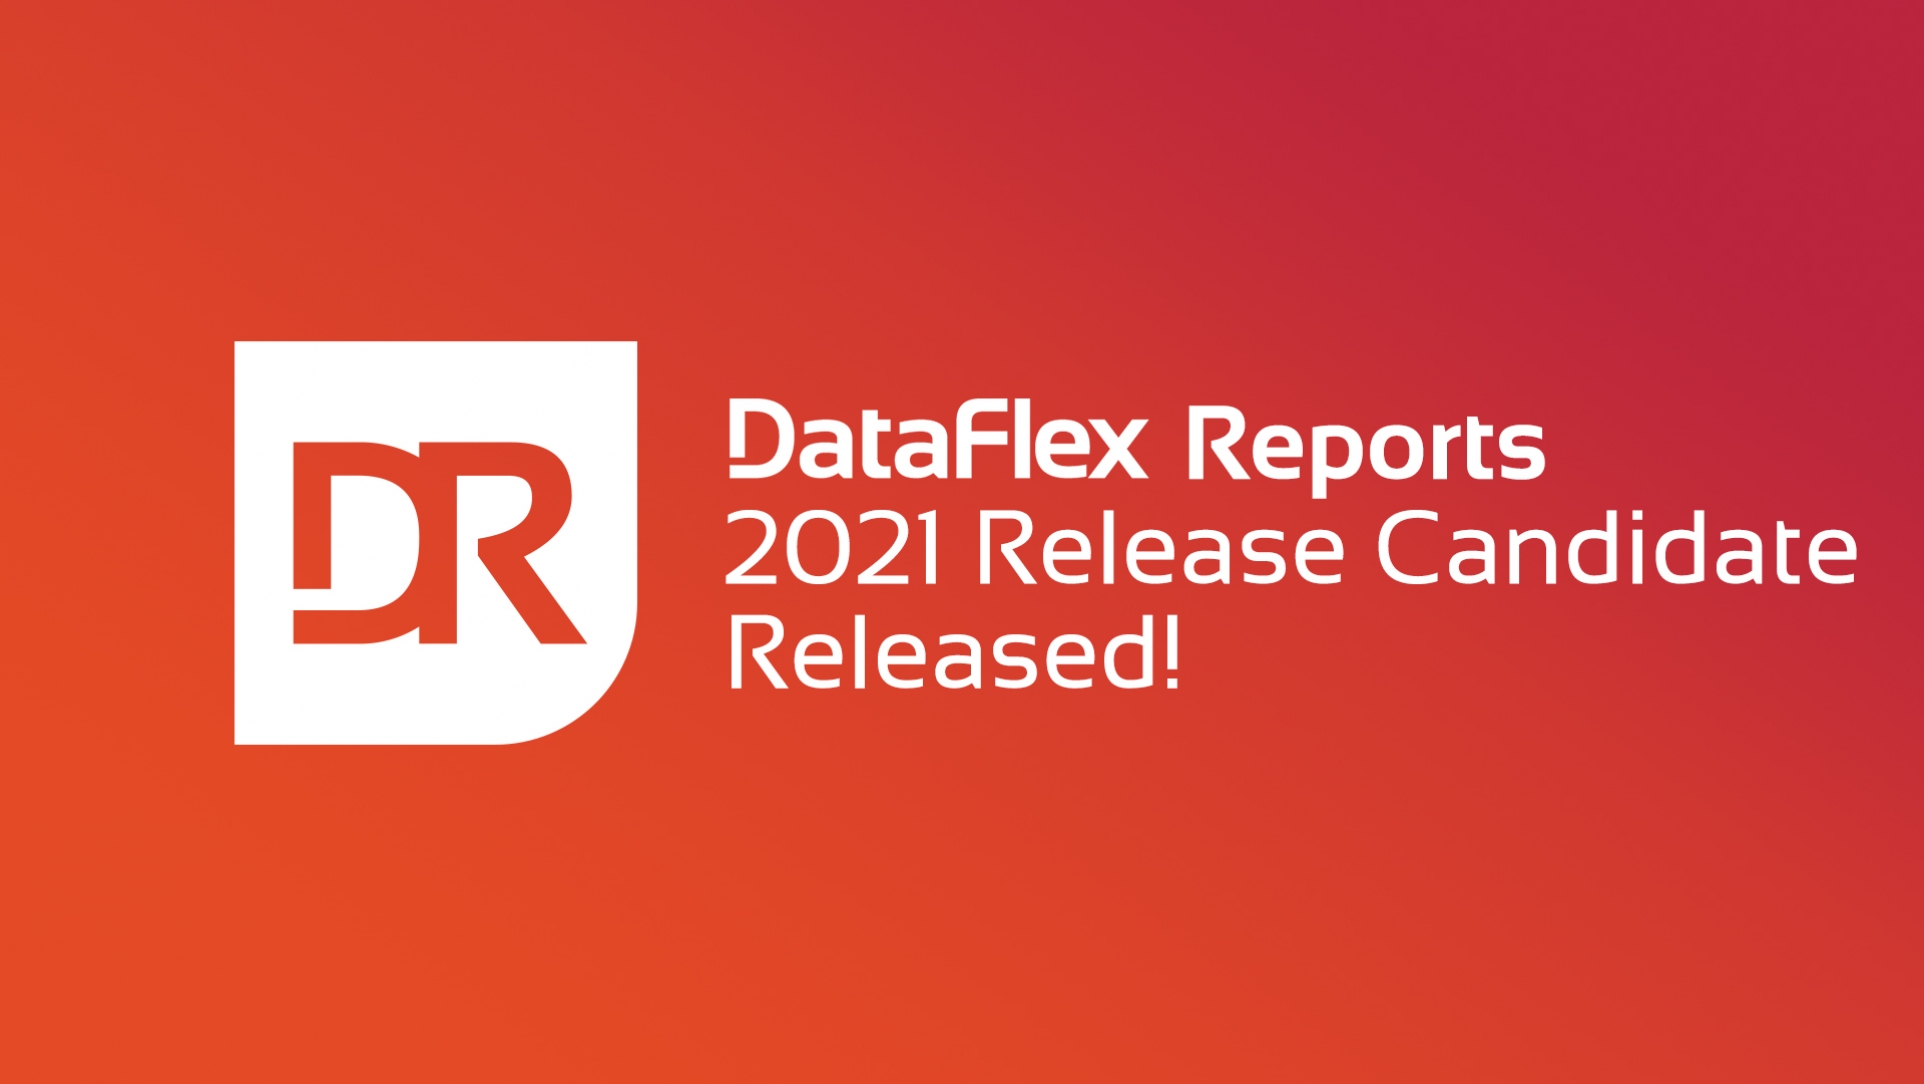 DataFlex Reports 2021 Release Candidate